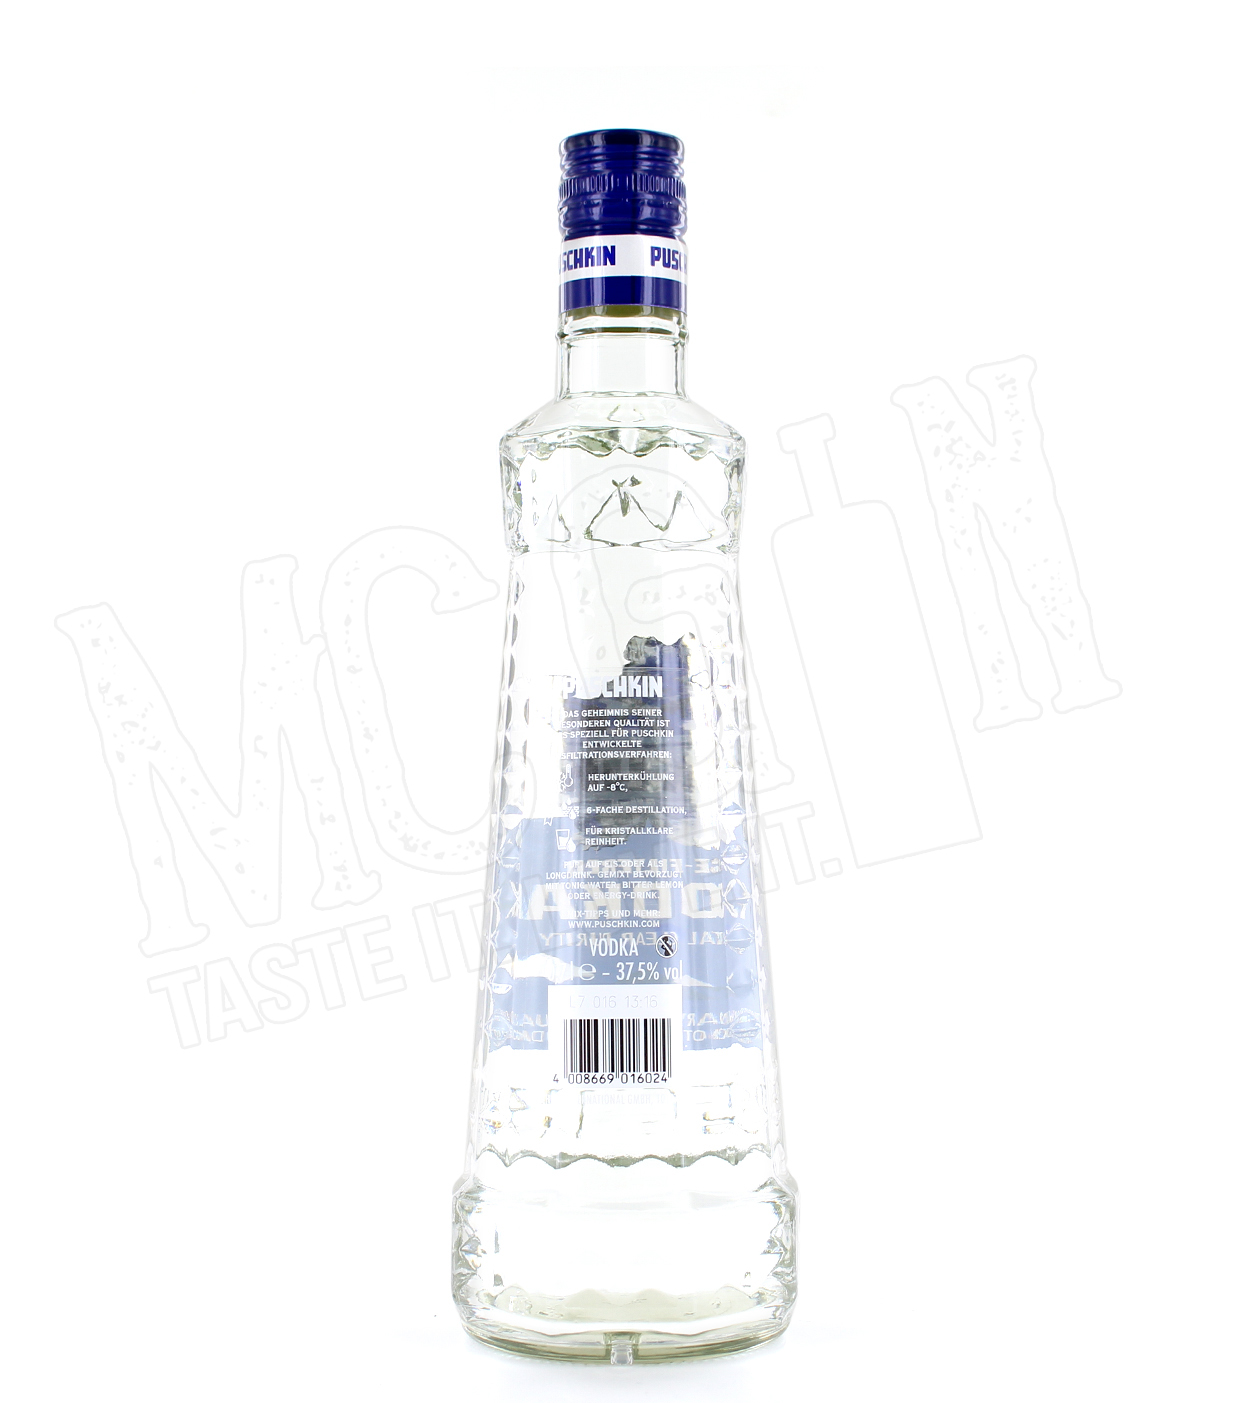 Puschkin - | it! Taste Ice-filtered Vodka Vodka love | 0.7L - it, Roggen McGin.ch